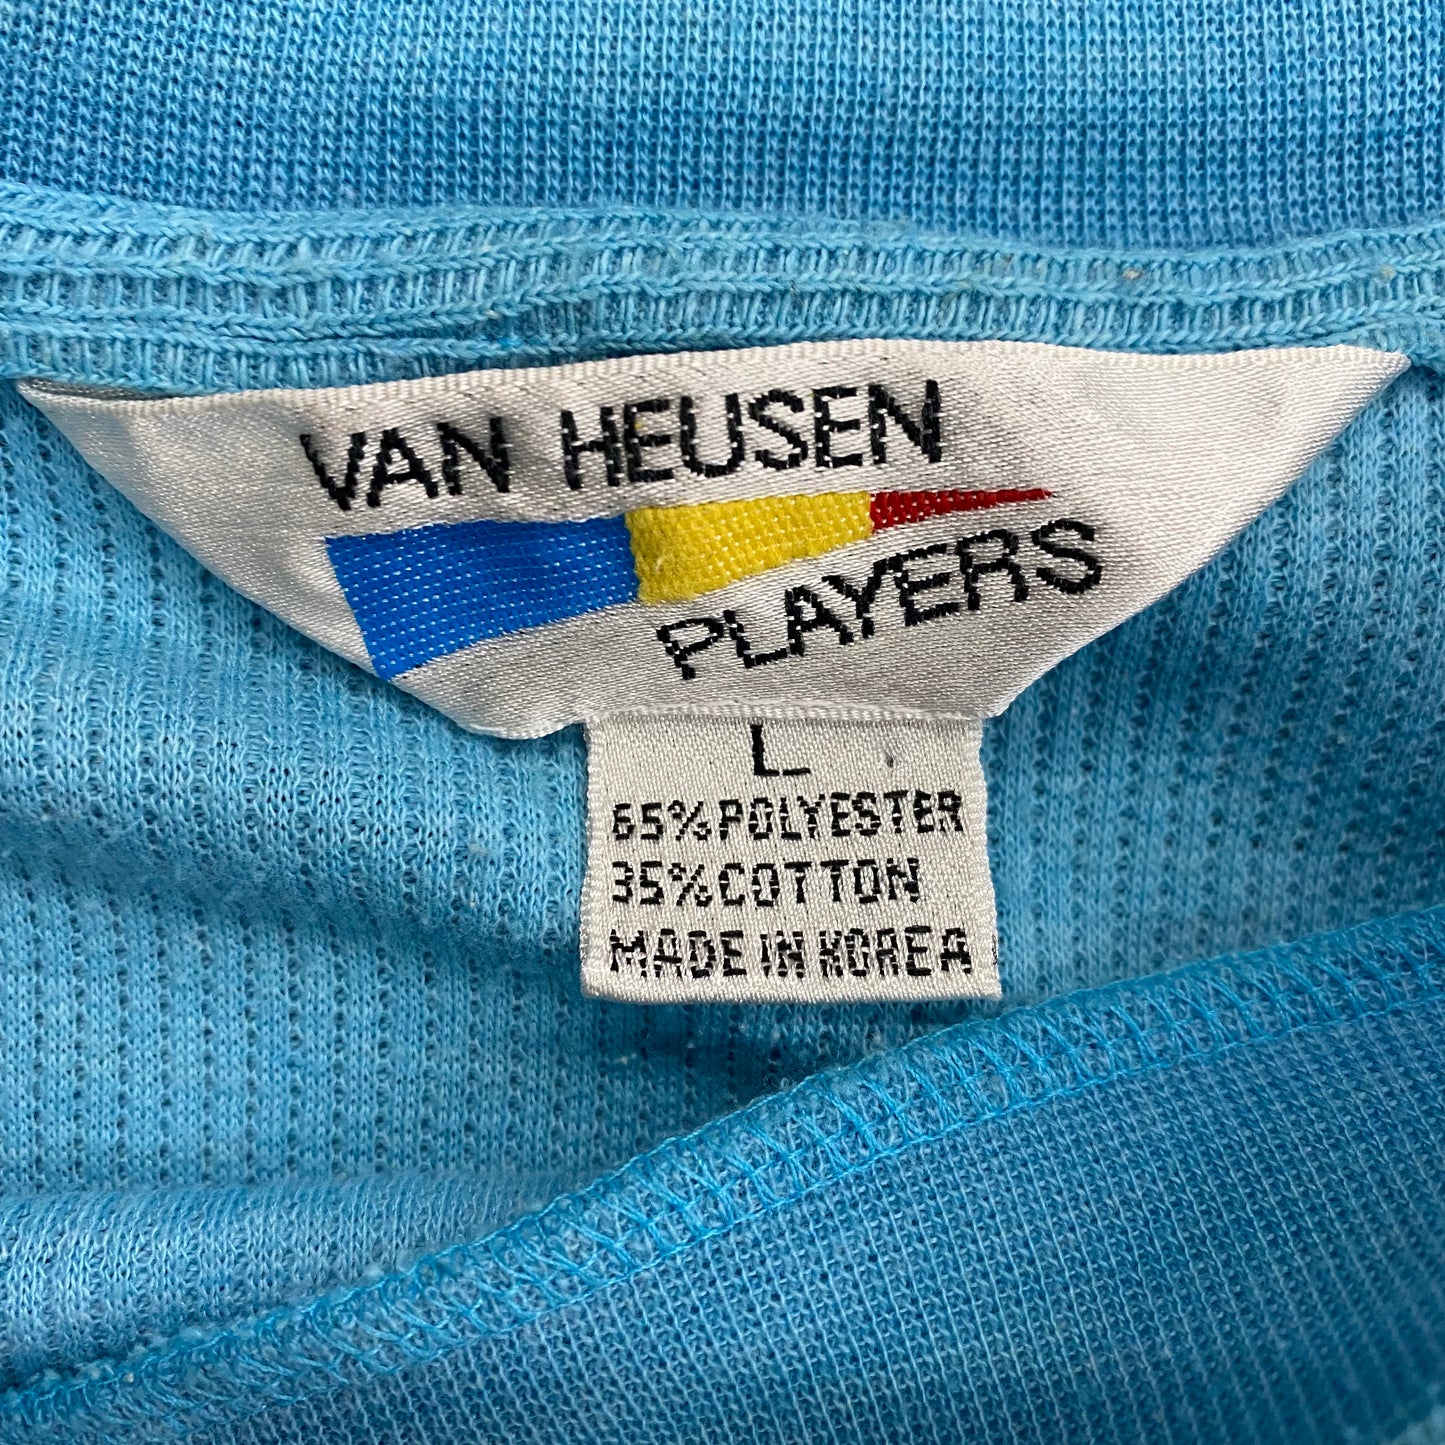 Vintage 1980s Van Heusen Players Light Blue Pocket Tee - Size Large